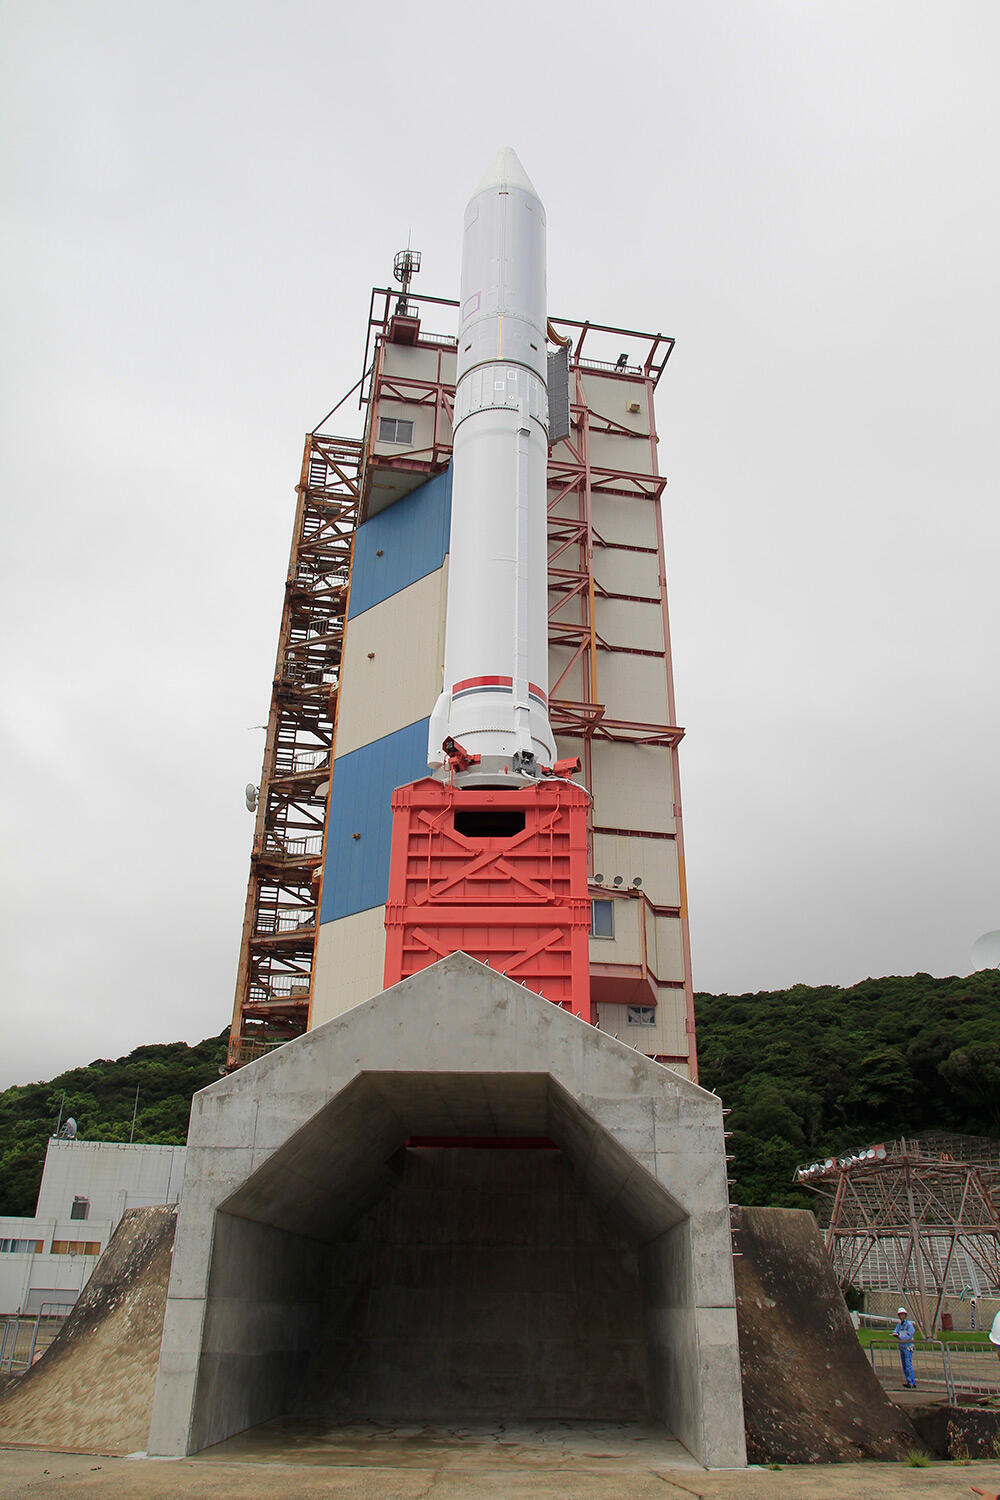 Epsilon set up on a concrete flame duct (bottom of photo) designed to reduce noise during launches (photo shows the Epsilon demonstration rocket)